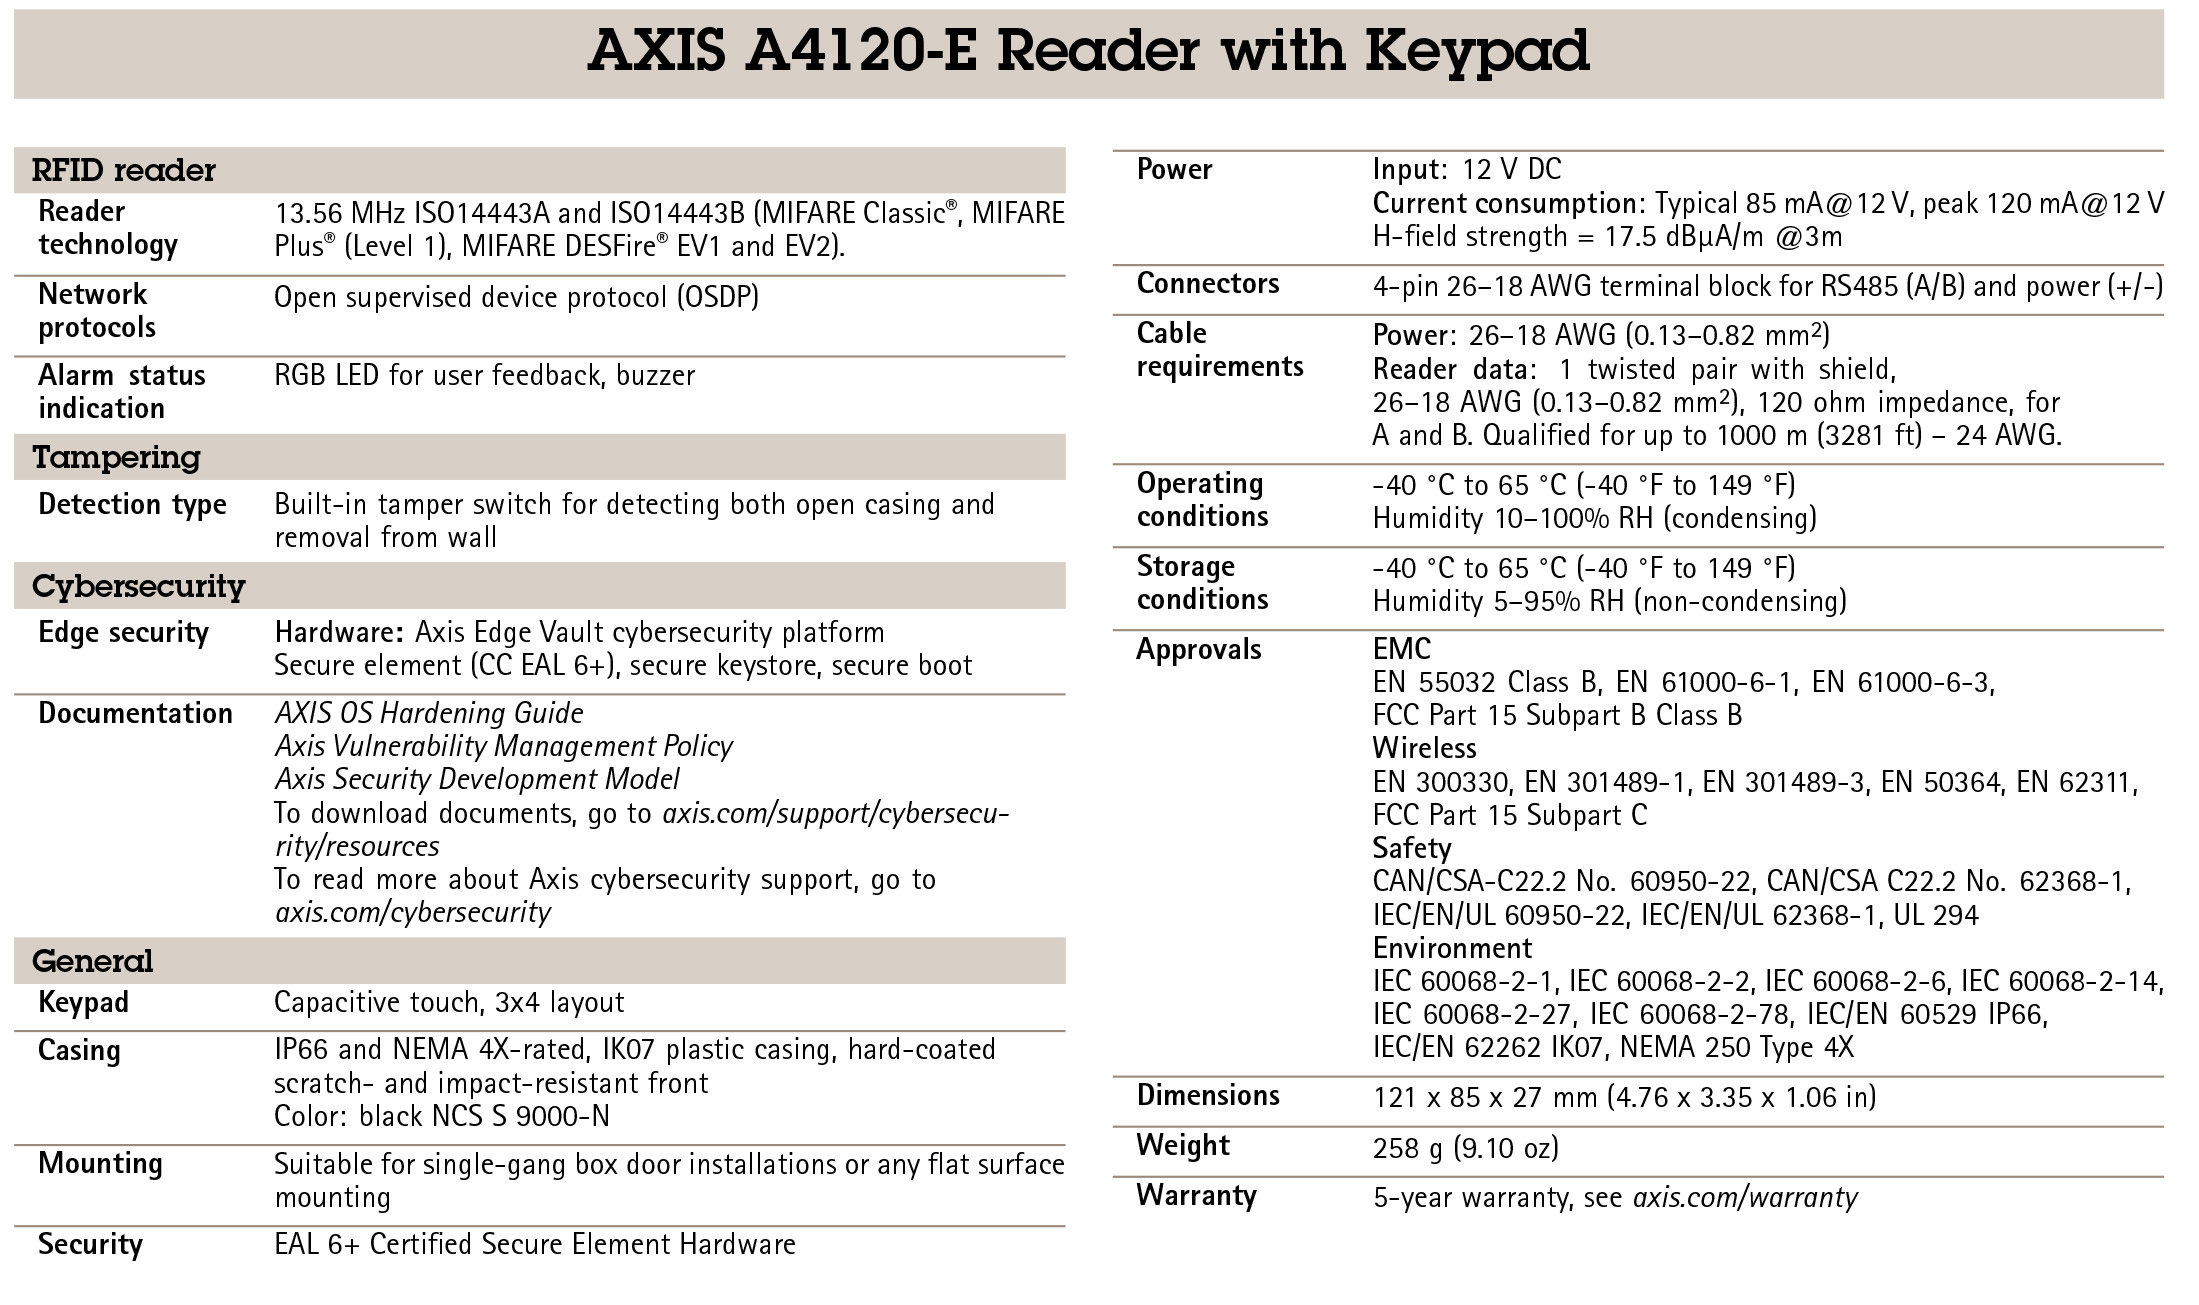 AXIS A4120-E Reader With Keypad